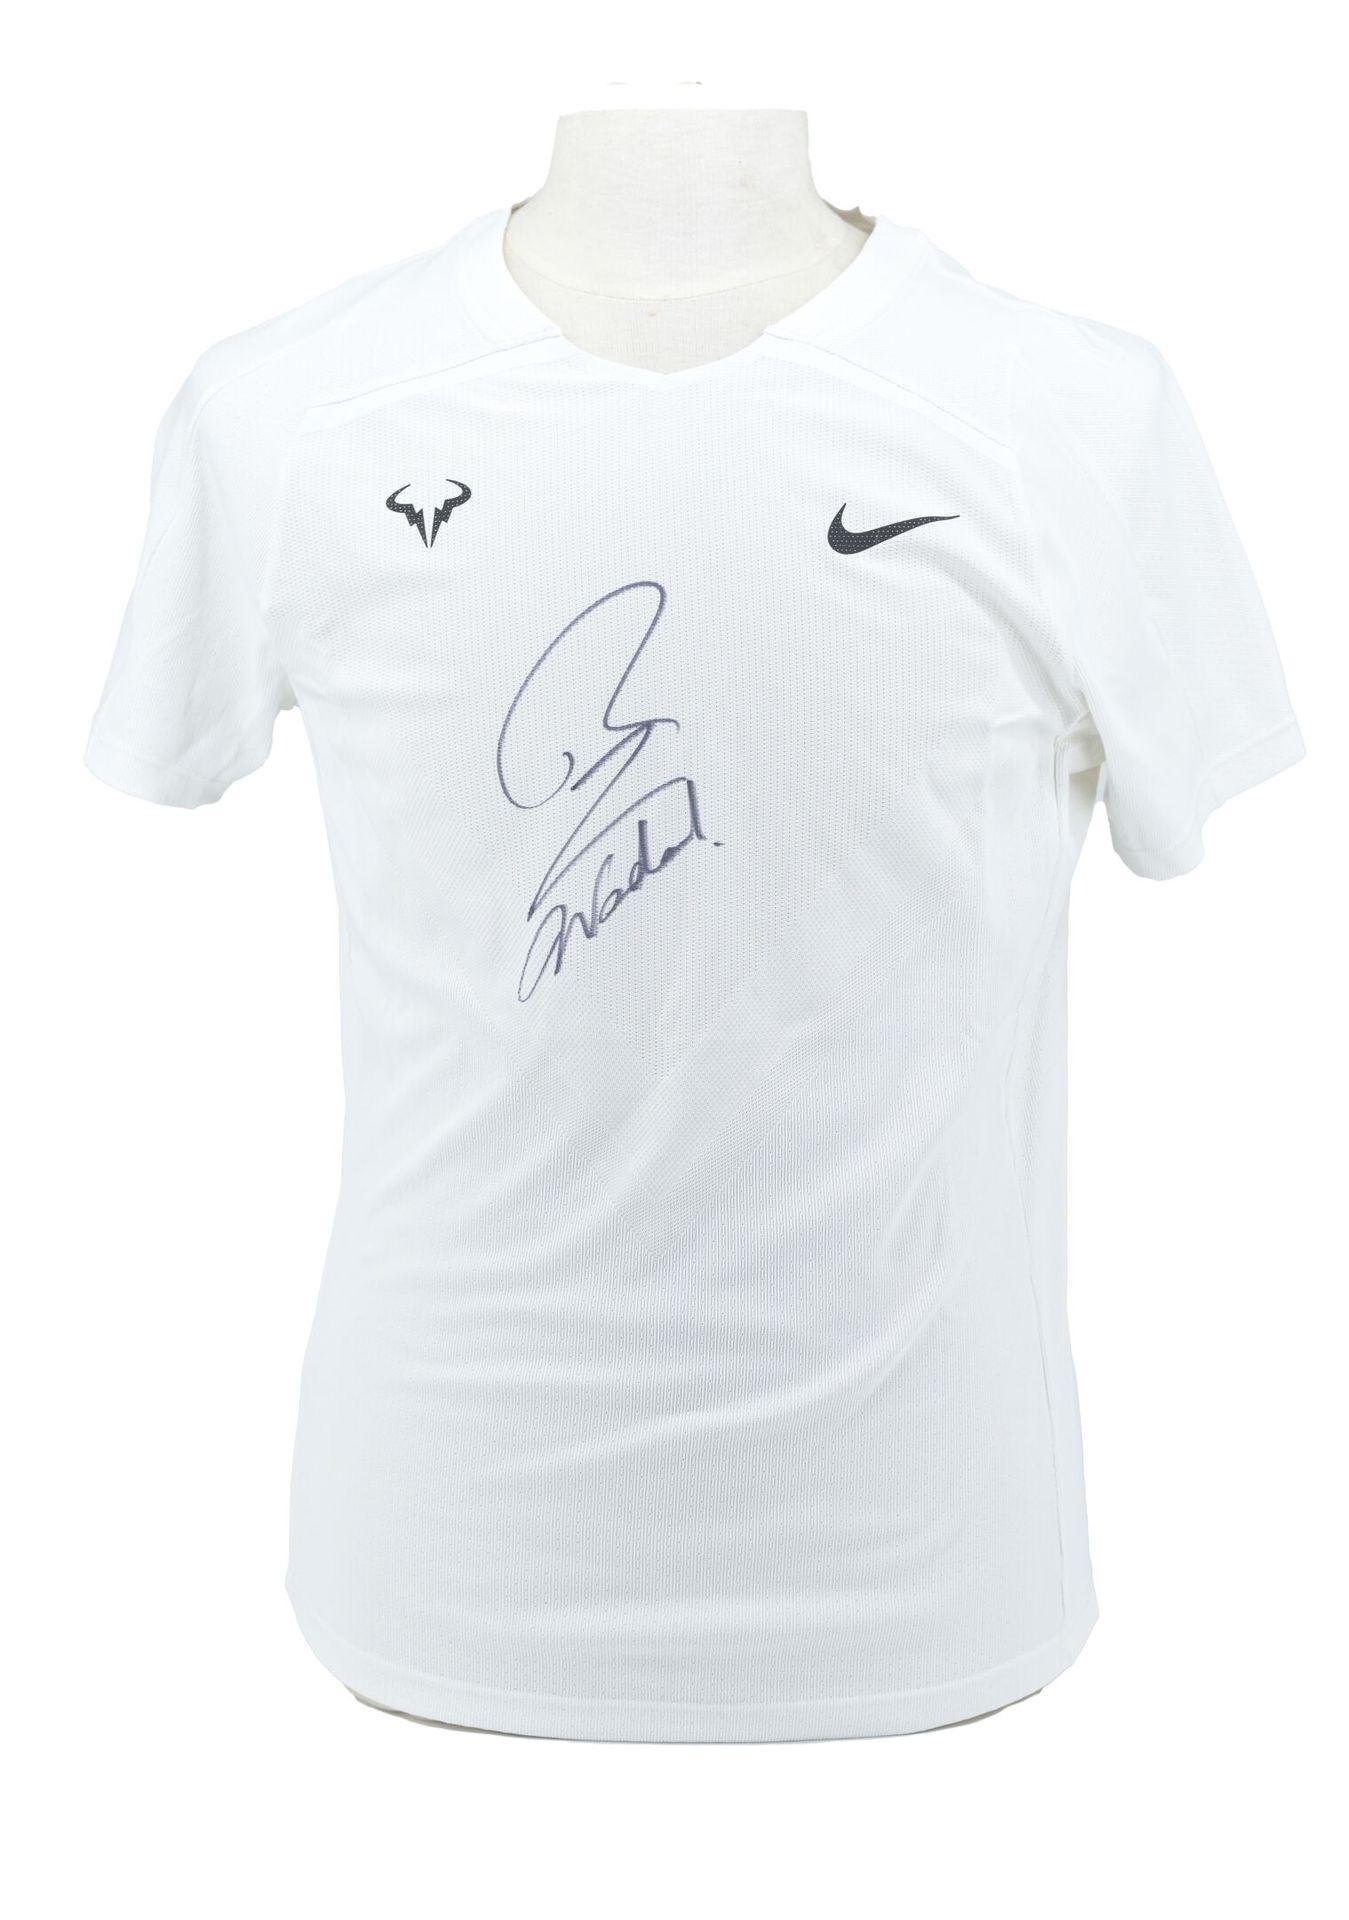 Null Maglia Nike autografata da Rafael Nadal - 2023

Nota : 
- Maglia offerta da&hellip;